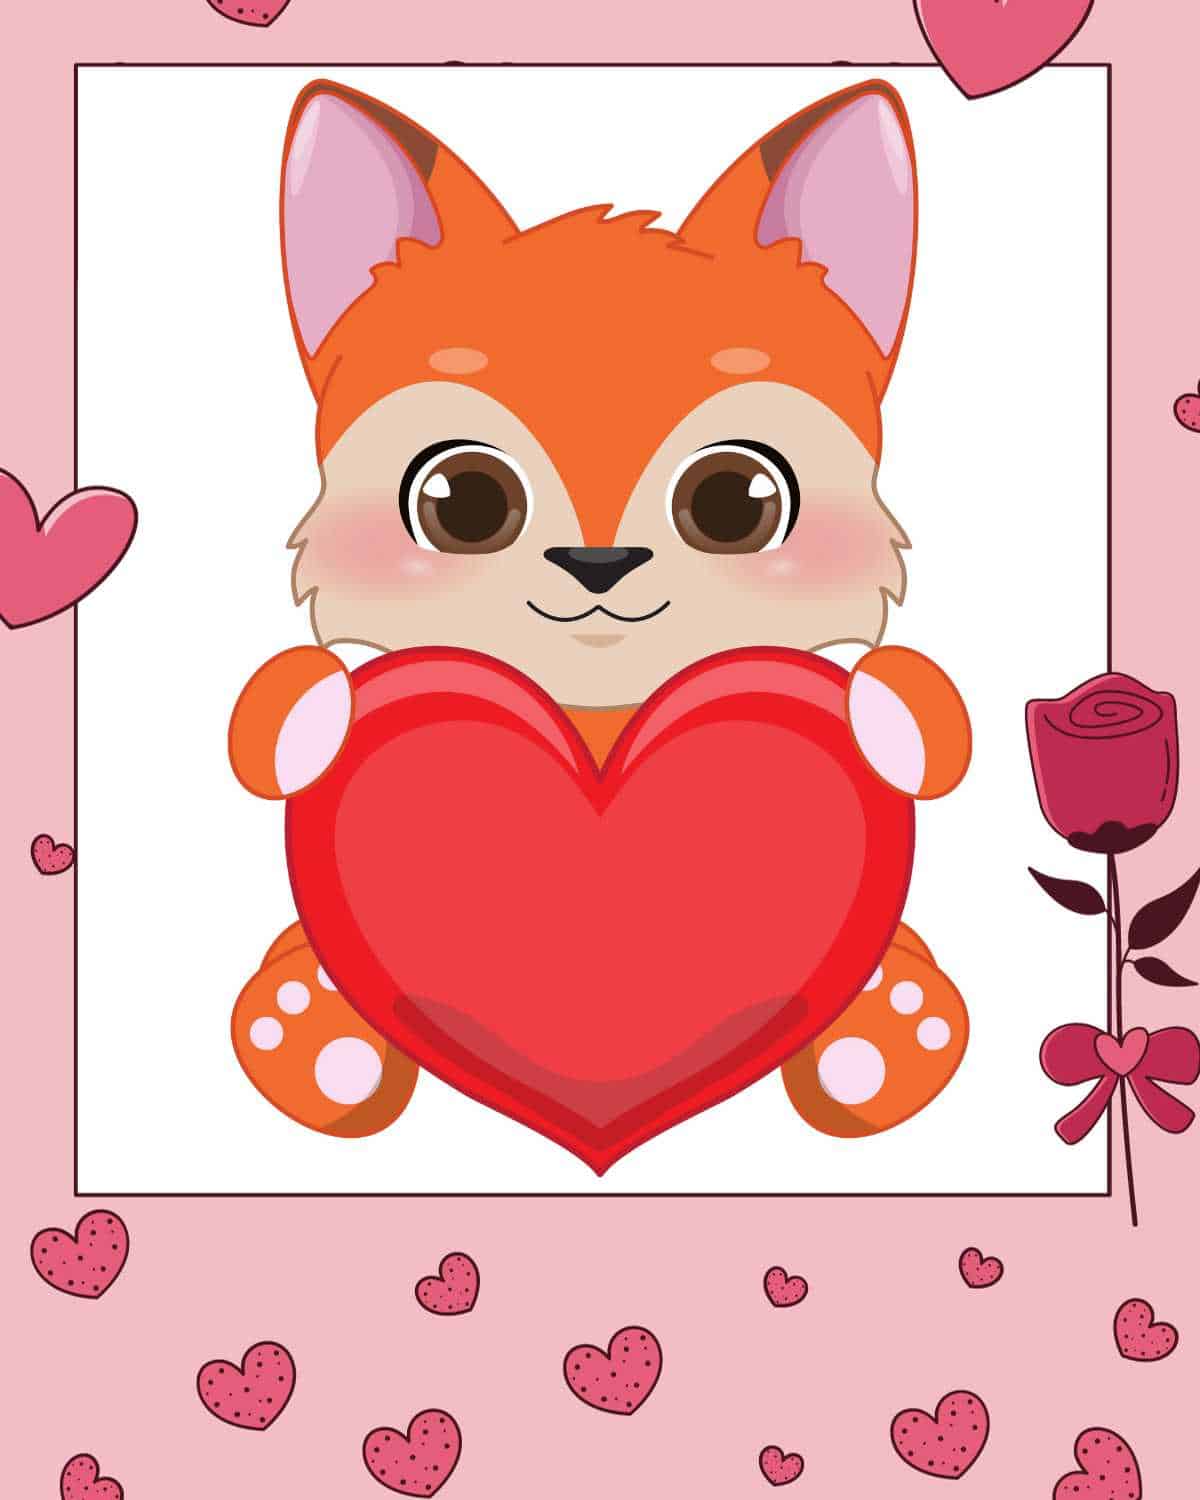 A cartoon fox holding a heart.